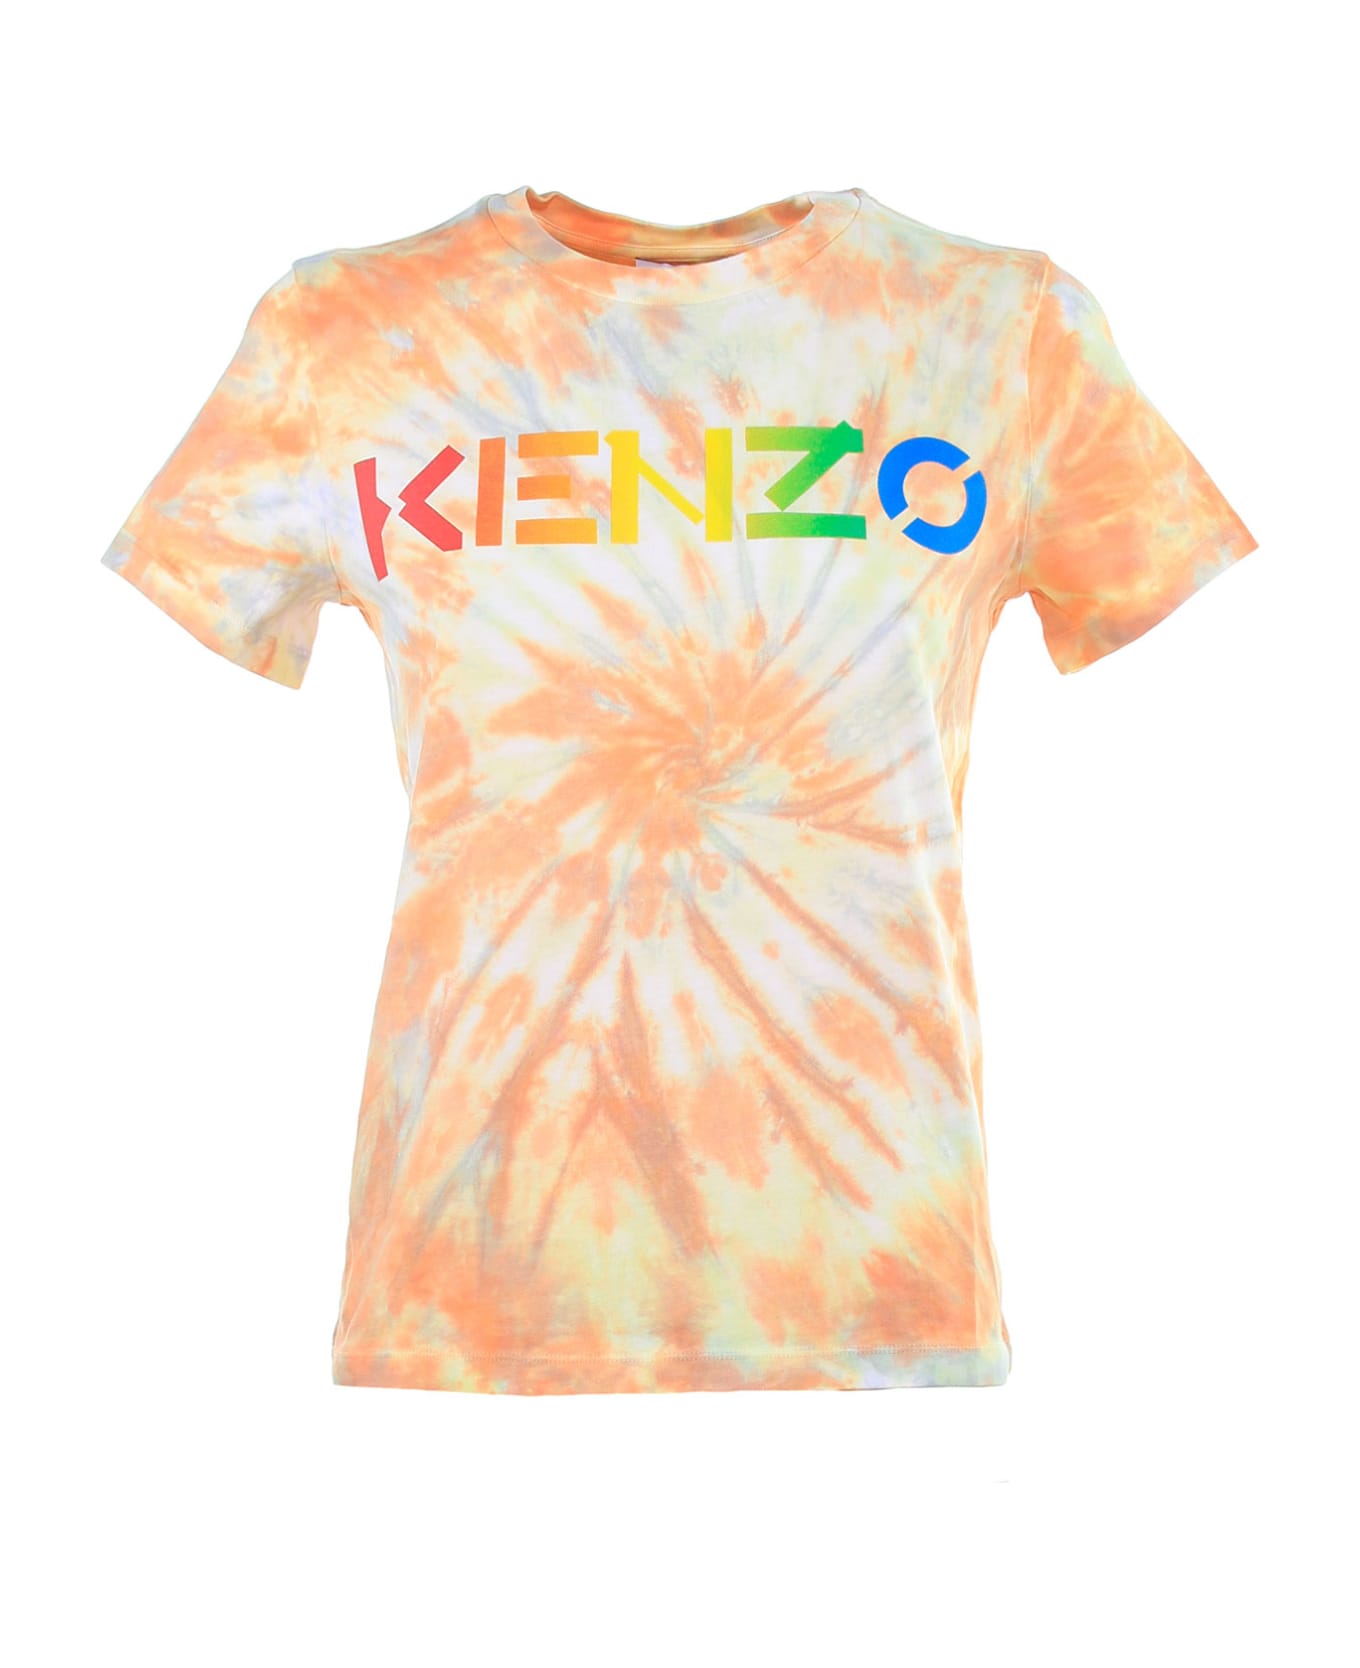 Kenzo T-Shirt - PEACH Tシャツ